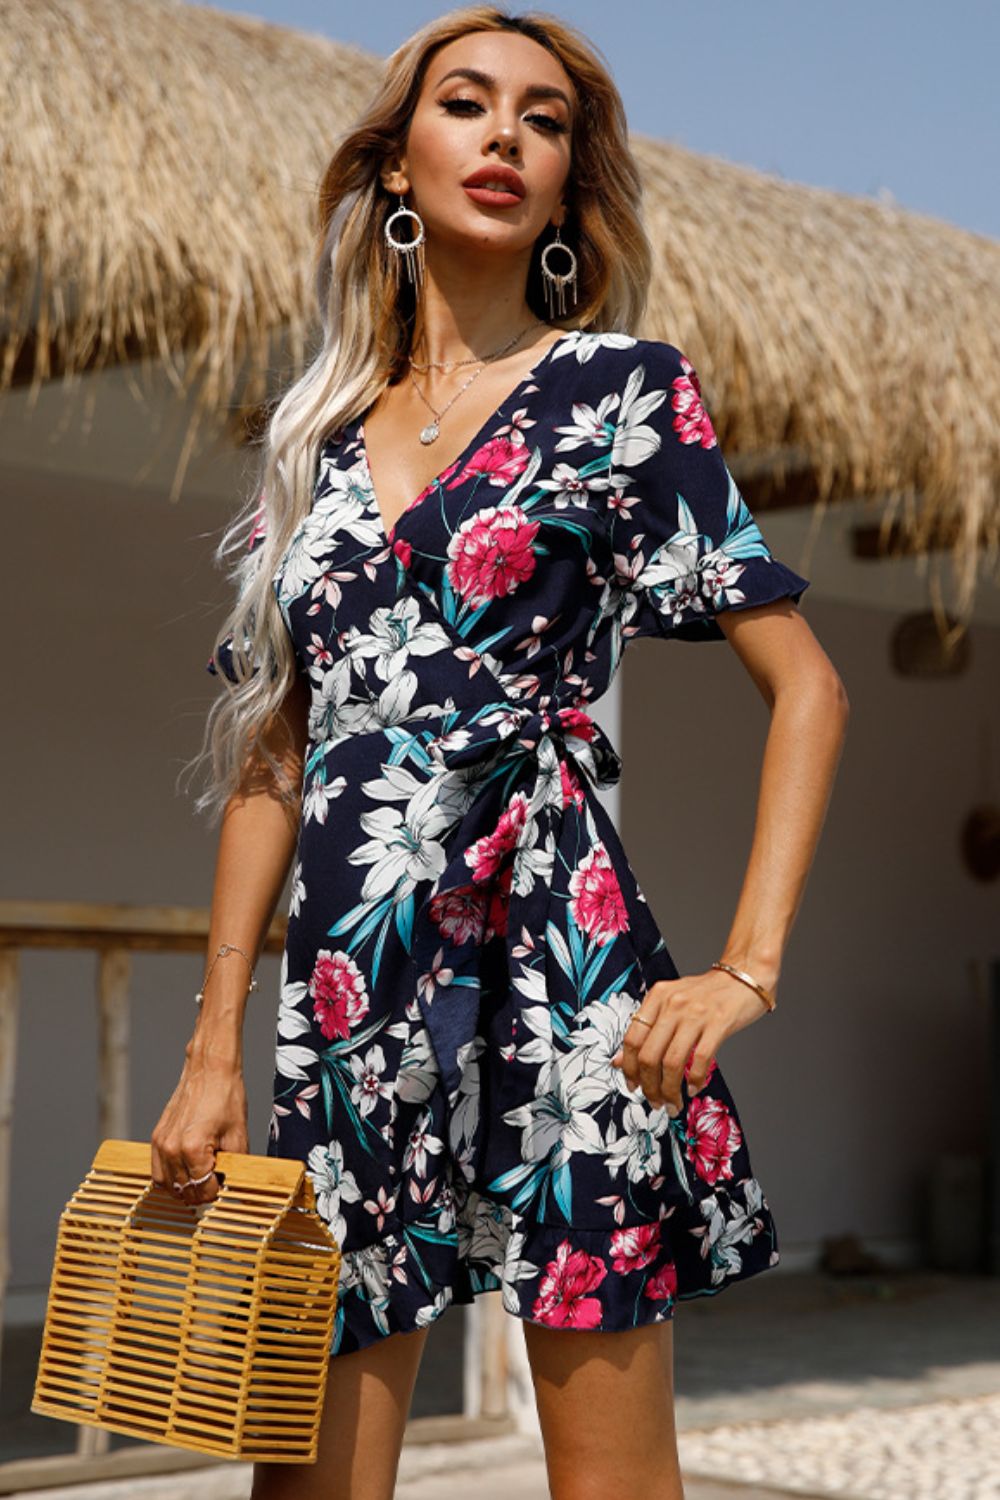 Floral Wrap Vacation Dress Tropical Print